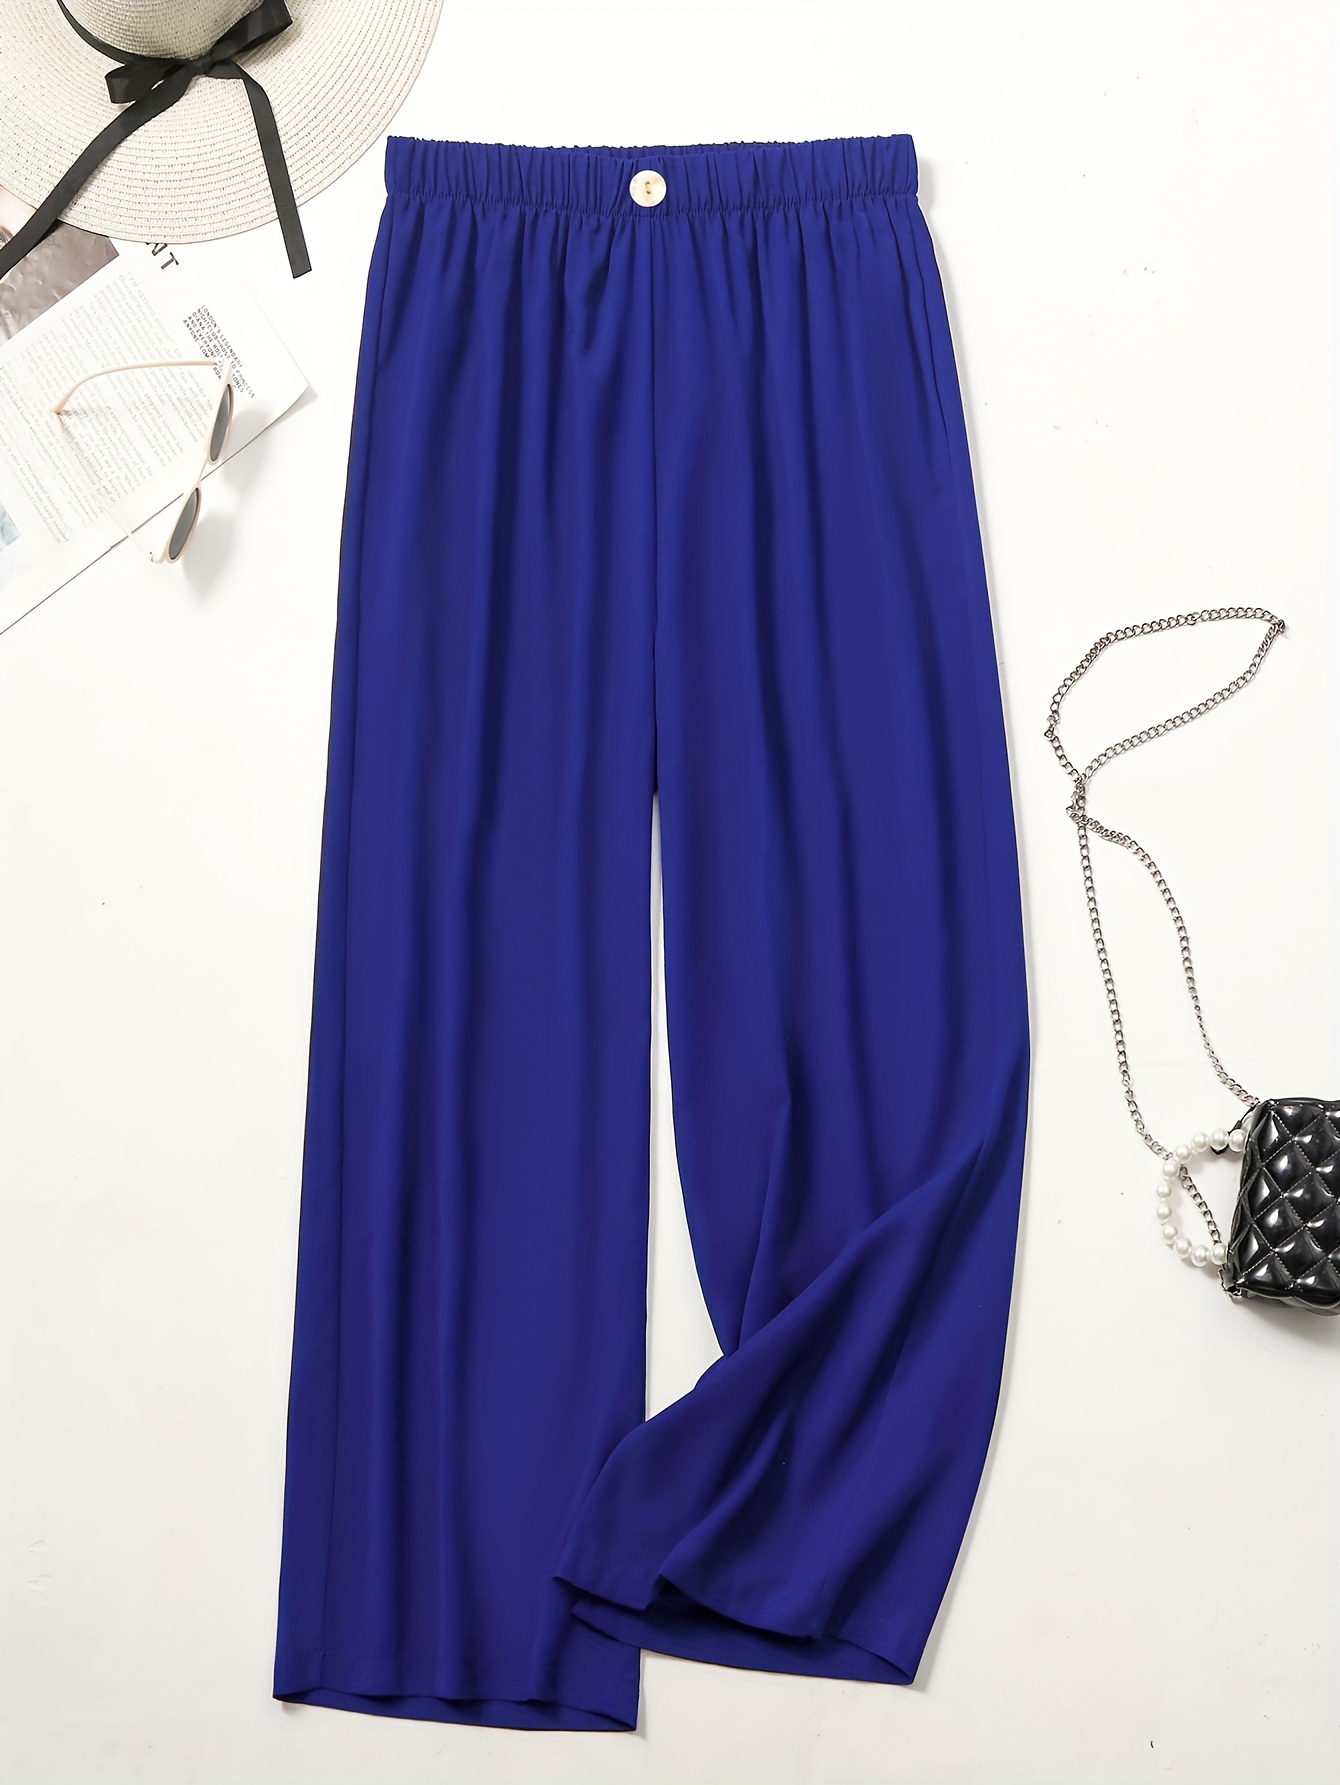 Women's Elegant Plain Flare Leg Royal Blue Long Plus Size Pants 0XL (12) 